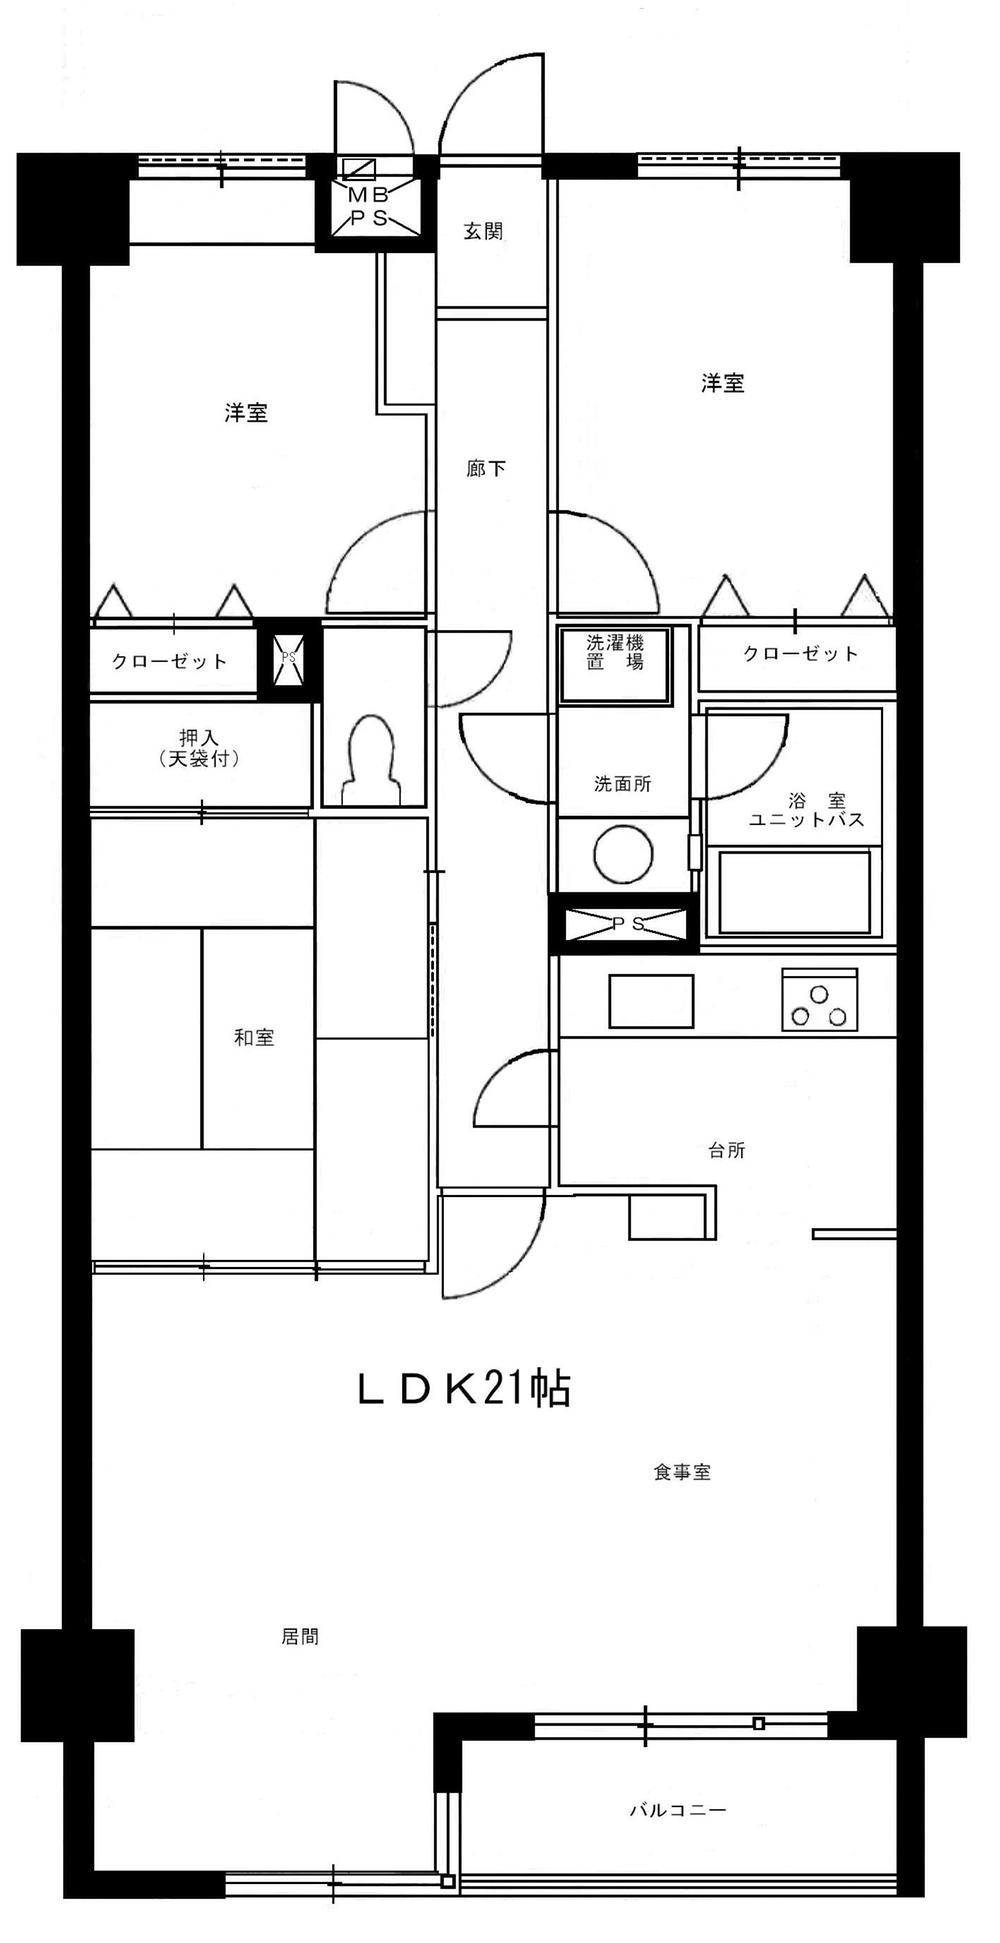 Floor plan. 2LDK + S (storeroom), Price 9.8 million yen, Occupied area 84.04 sq m , Balcony area 4.38 sq m